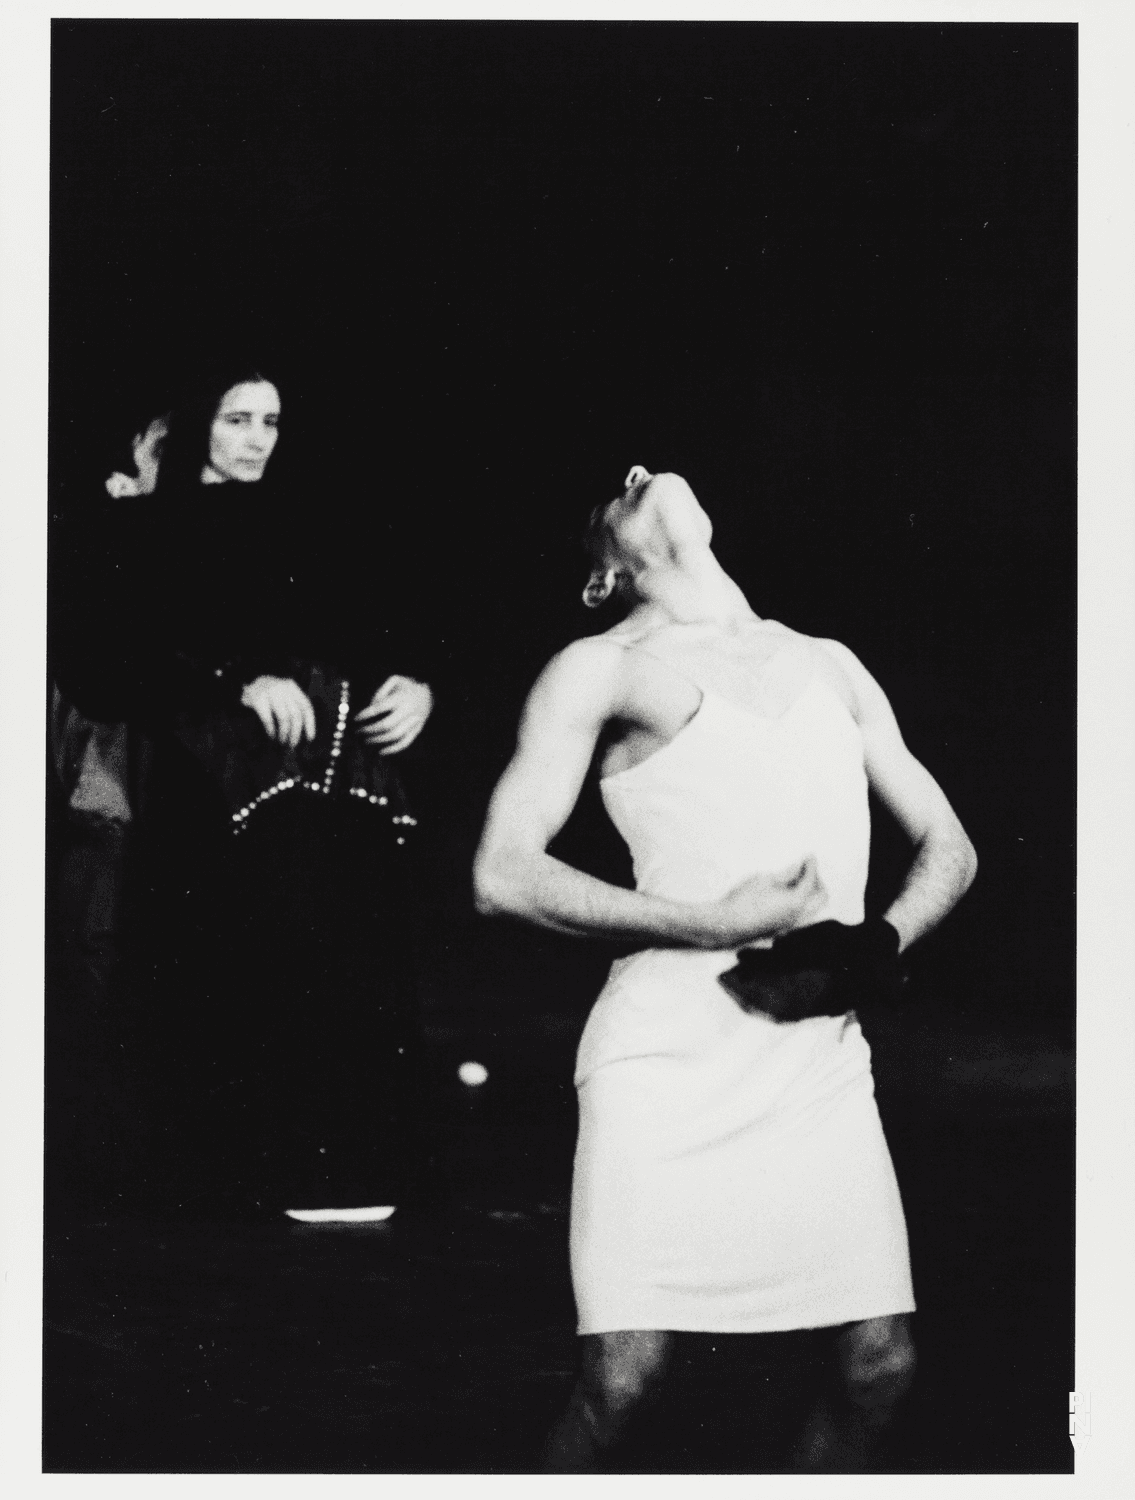 Antonio Carallo and Beatrice Libonati in “Ahnen” by Pina Bausch